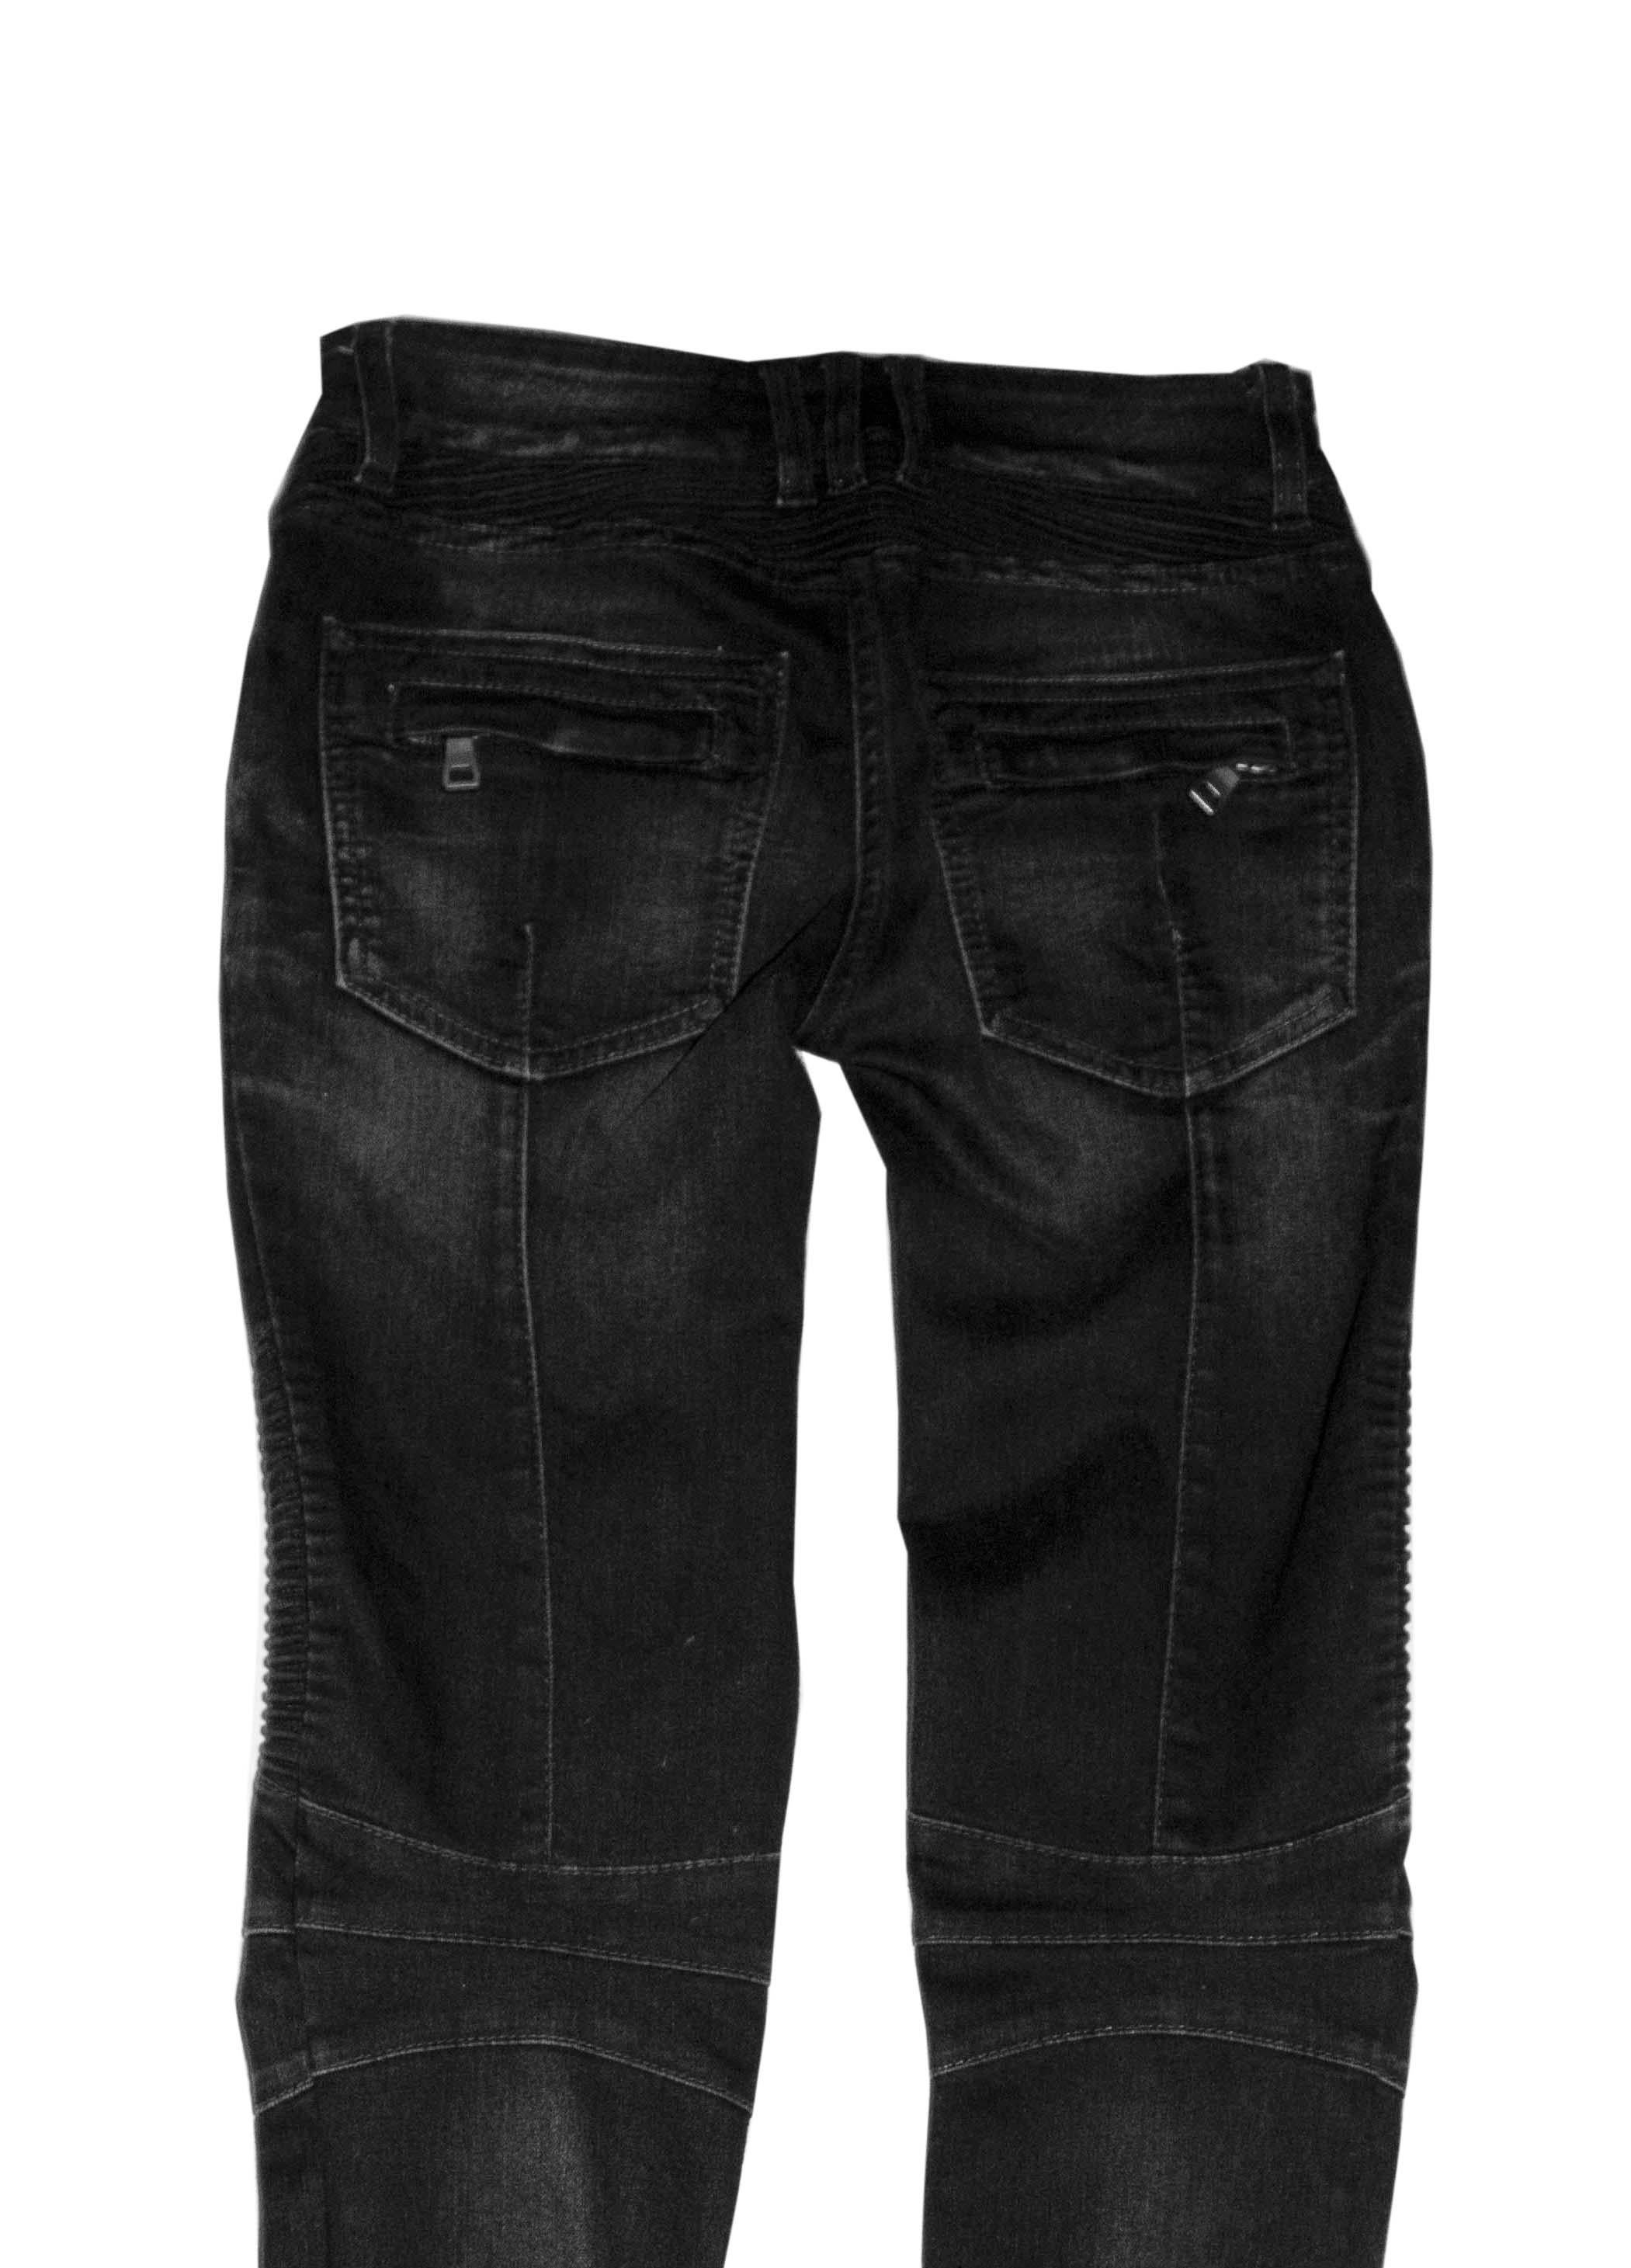 balmain jeans black